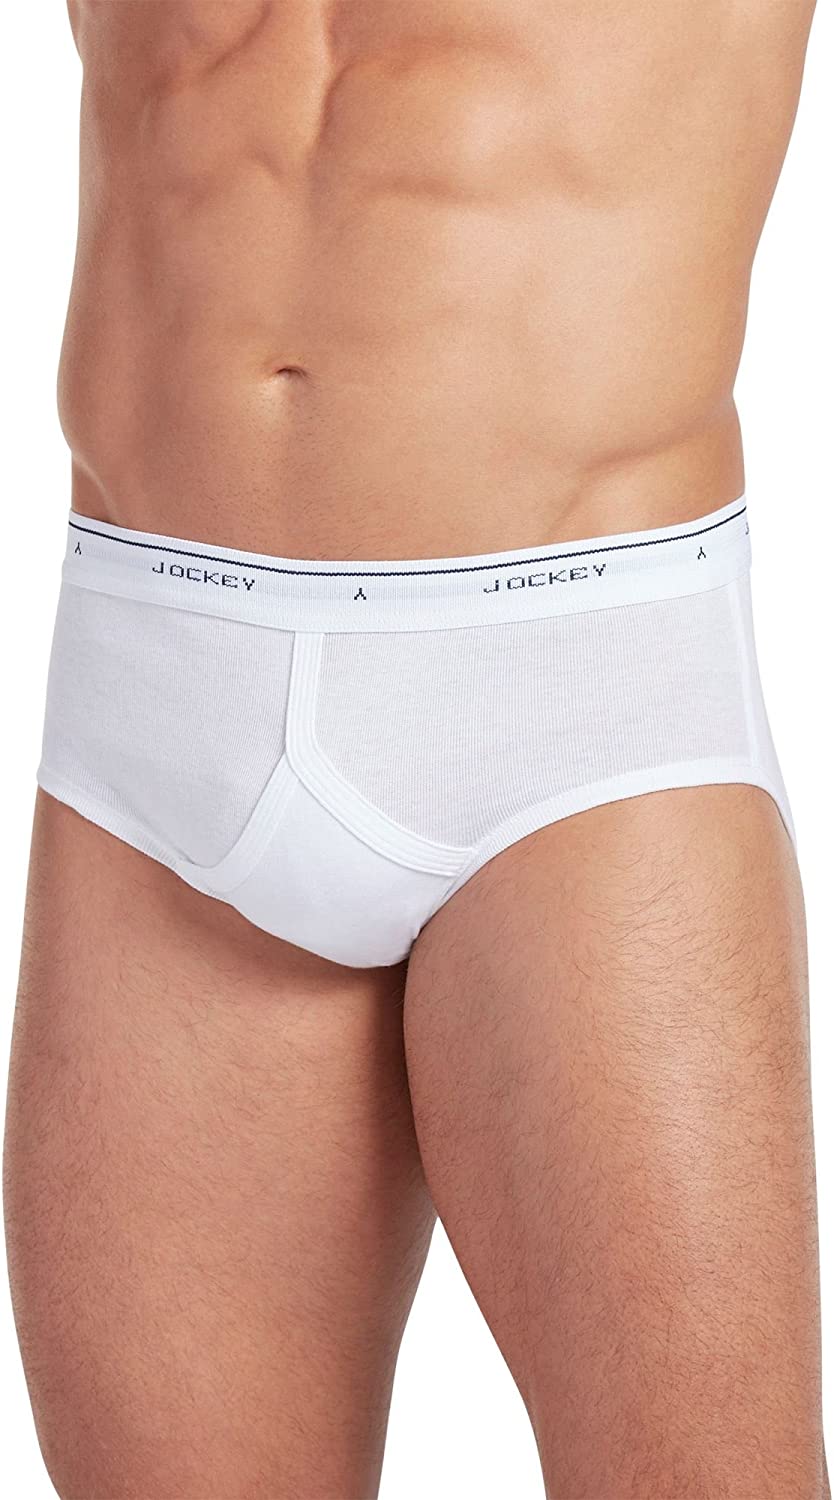 Men's Underwear Classic Low Rise Brief - 6 Pack